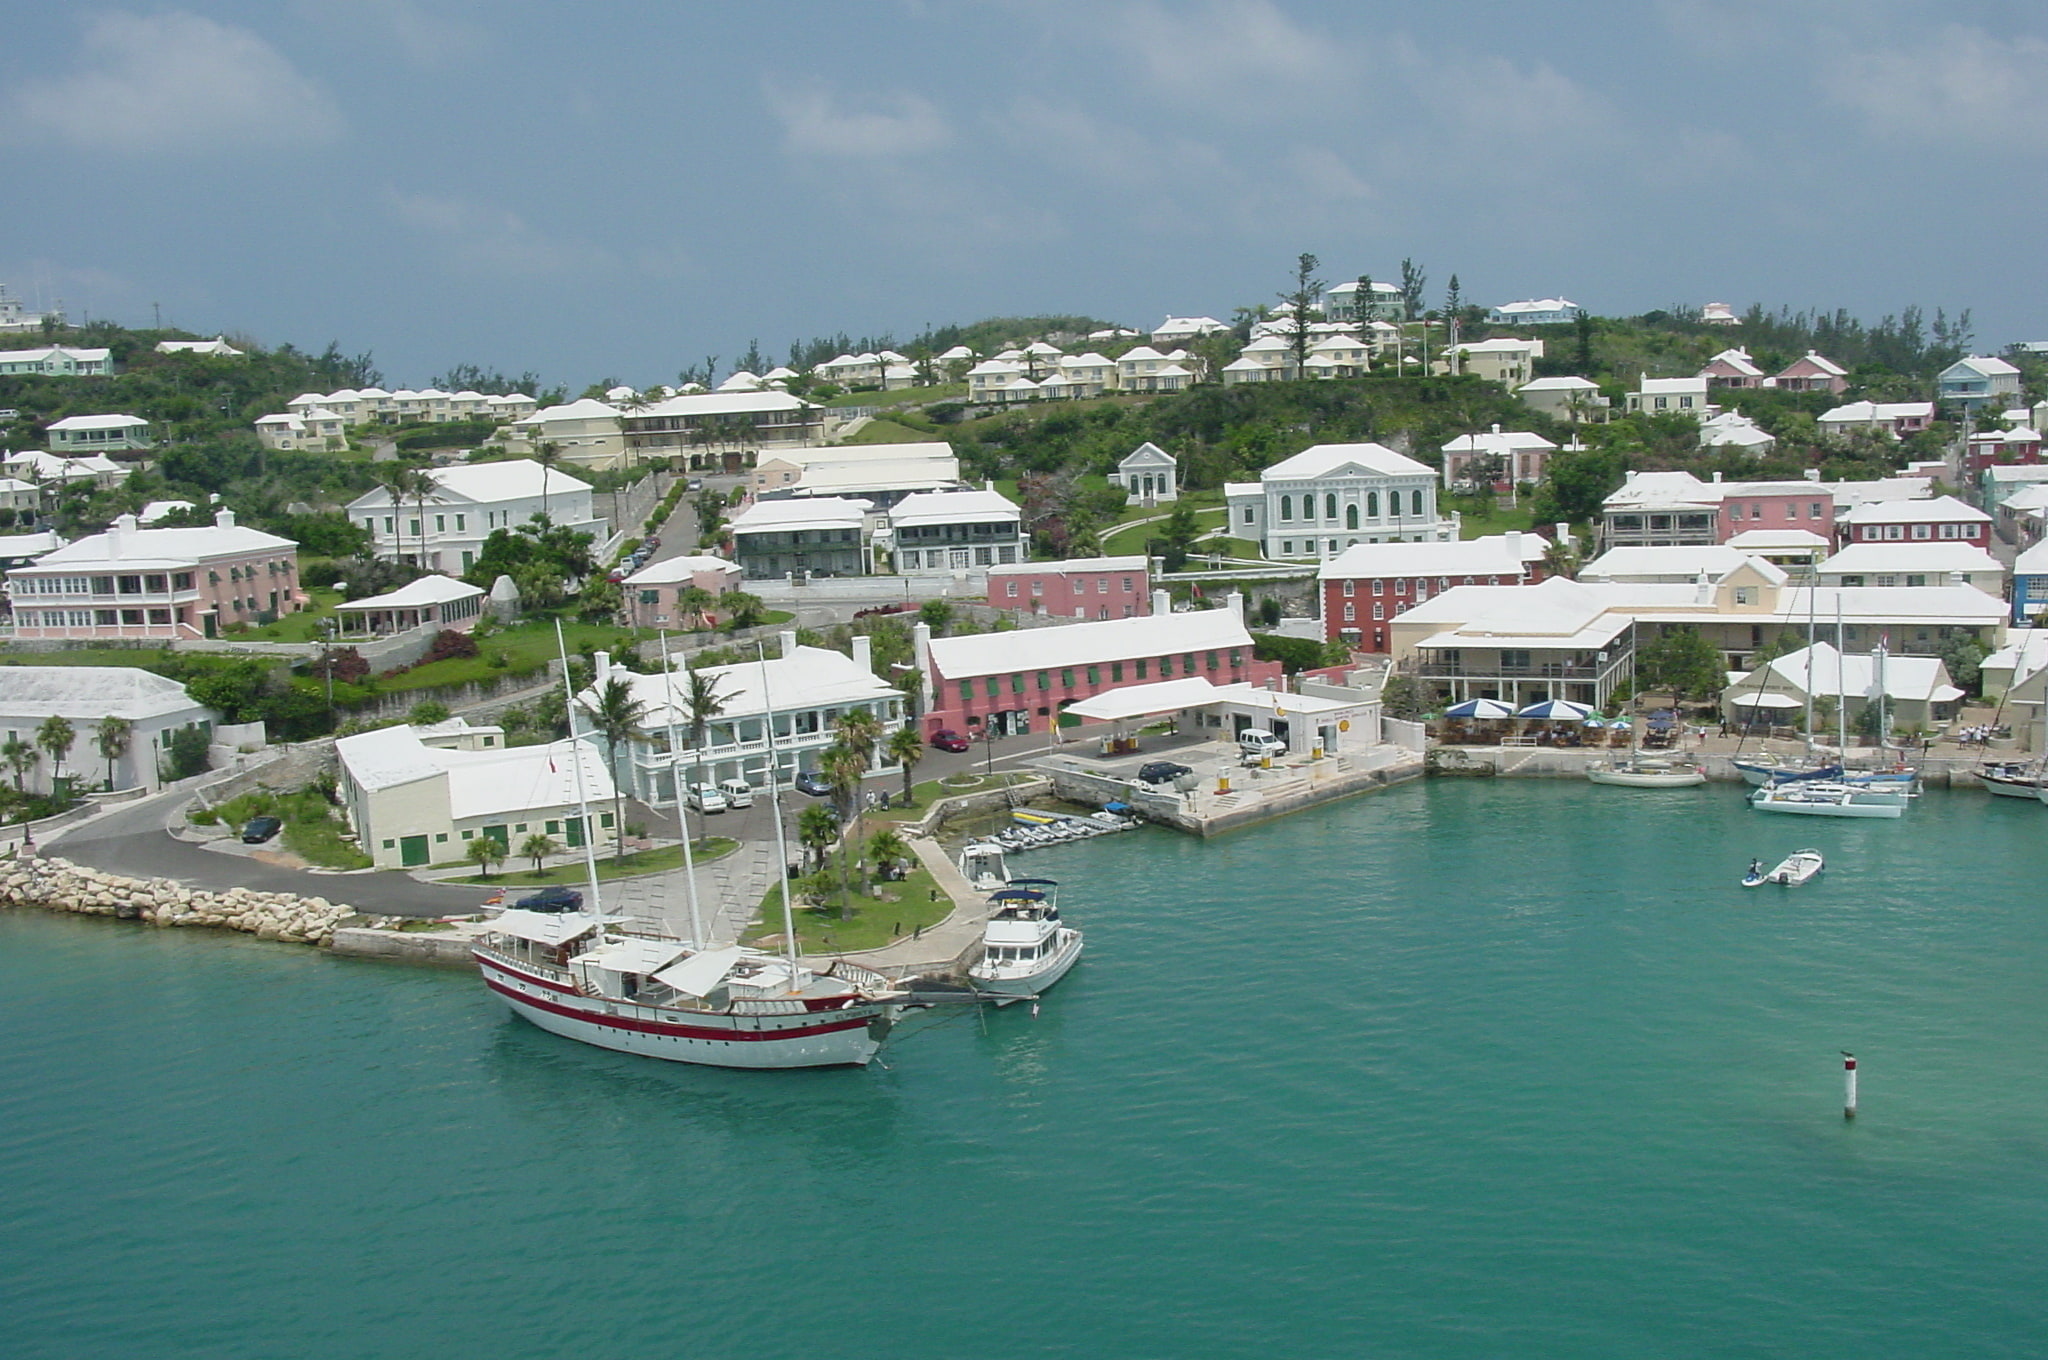 Saint George's, Bermudes